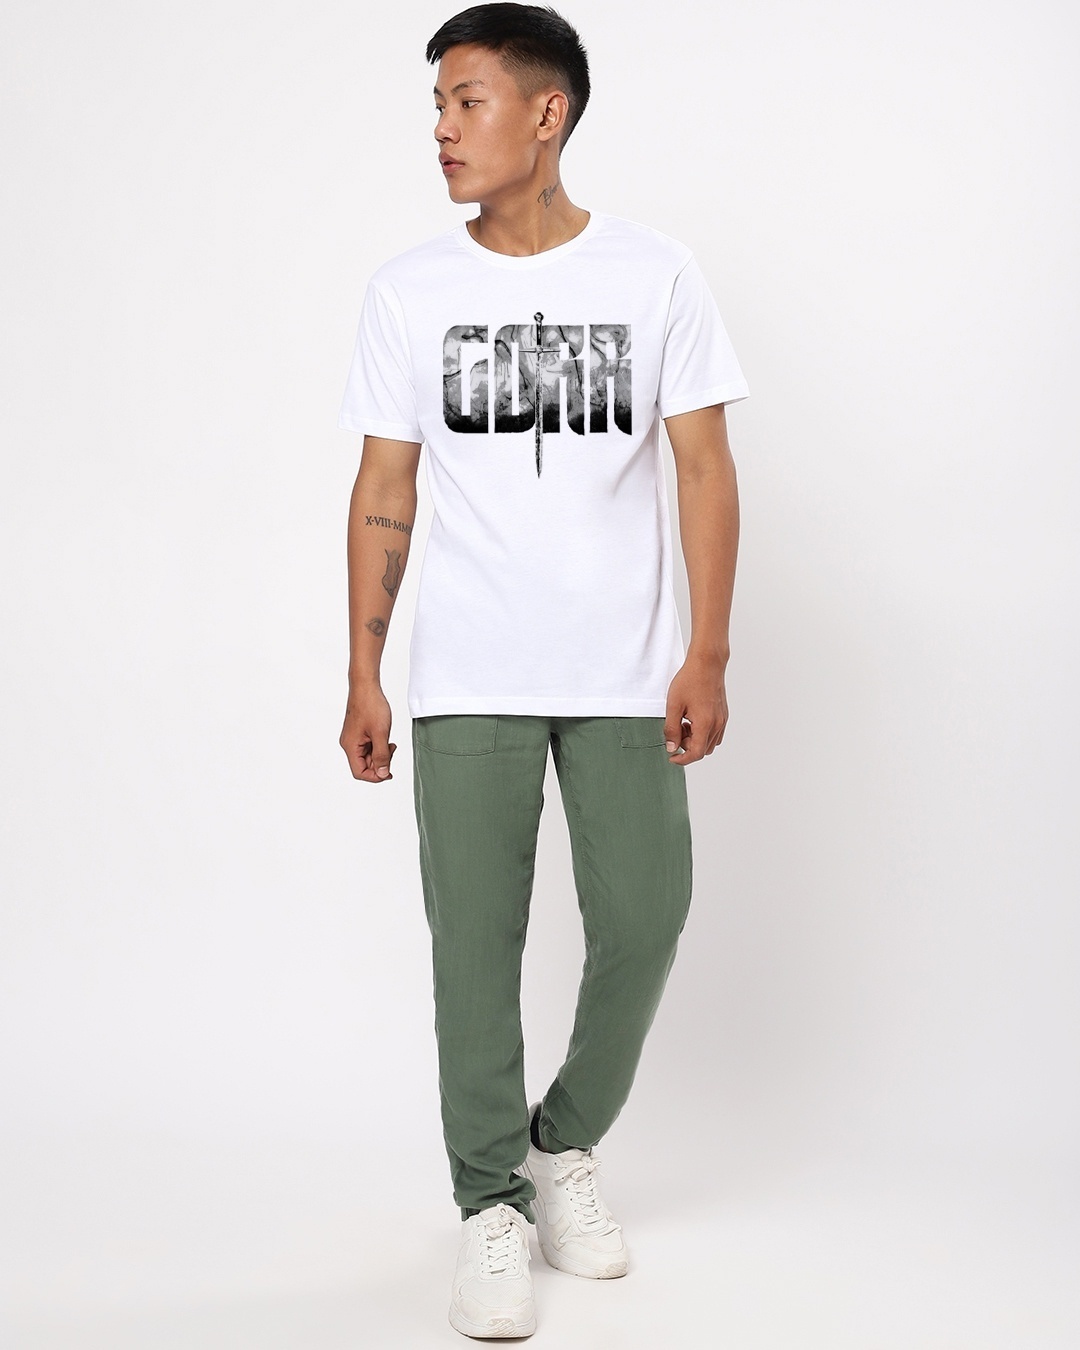 Shop Men's White Gorr Typography T-shirt-Design